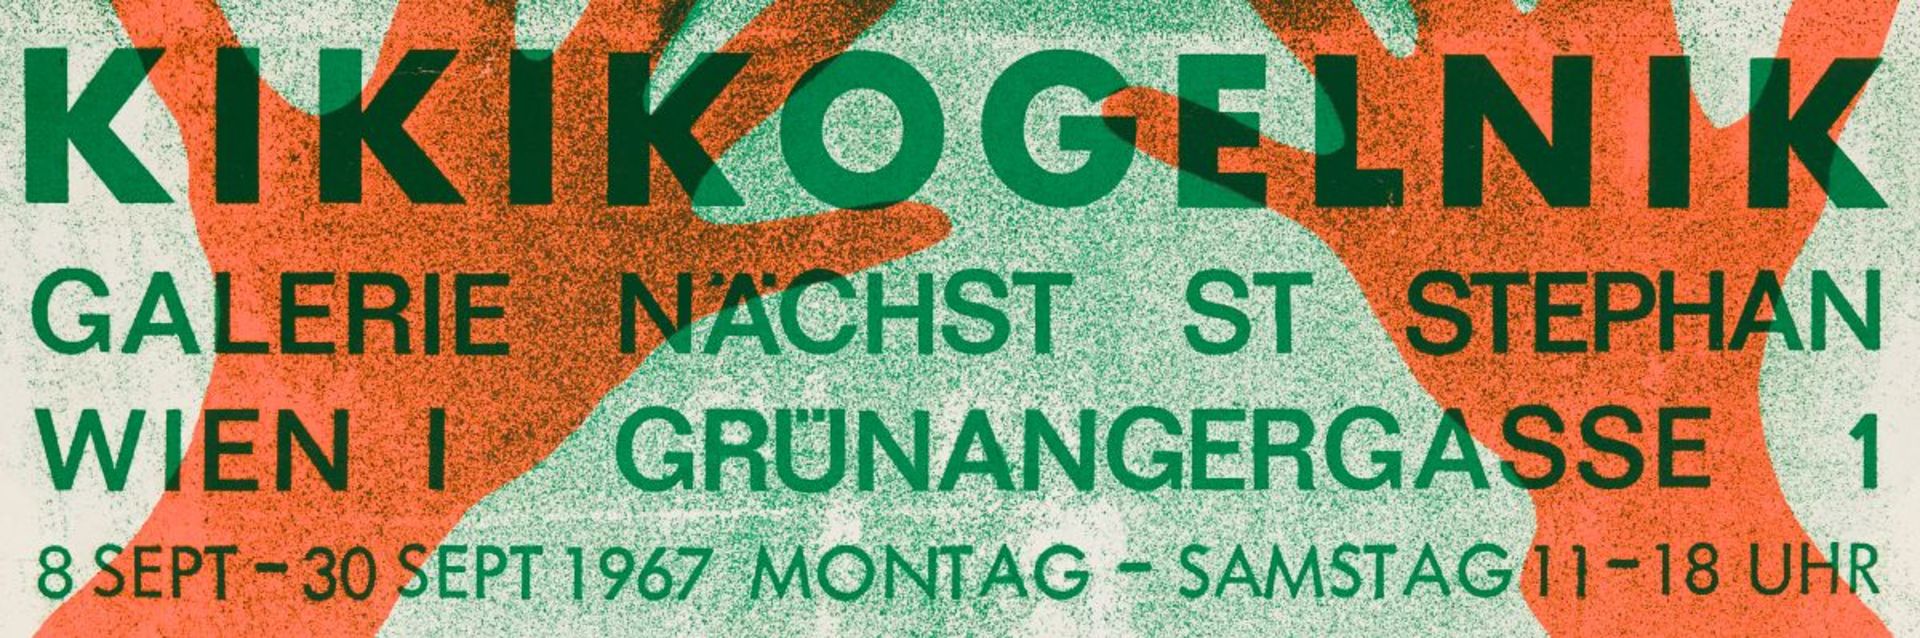 Kogelnik, Kiki(1935 - 1997)Exhibition Poster from Galerie Nächste St.Stephan, 1967colour - Image 2 of 3